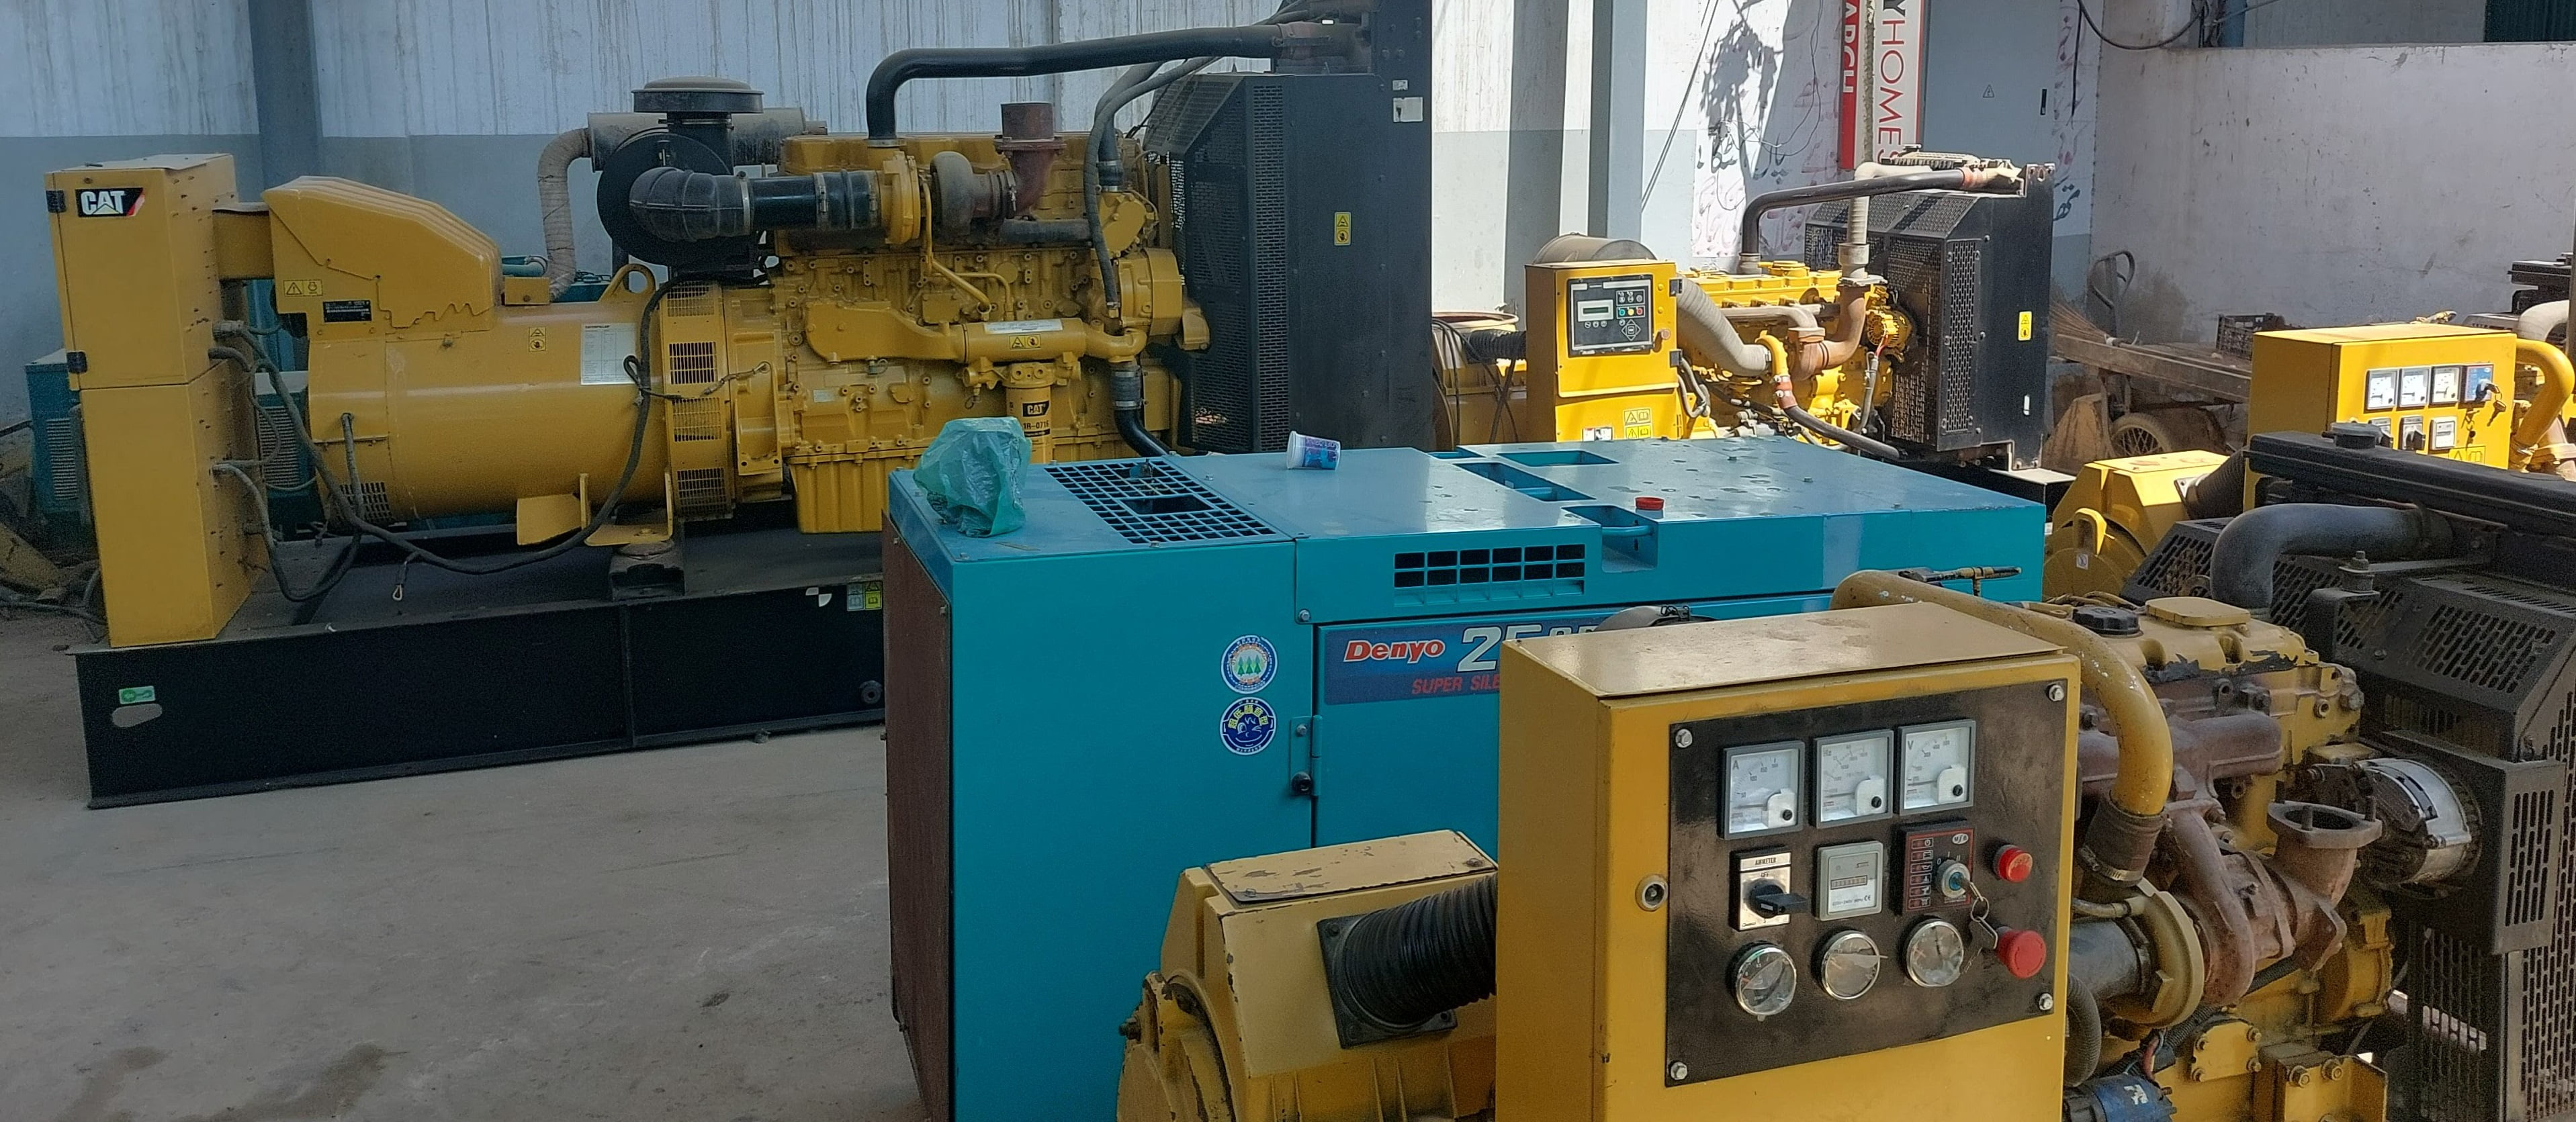 Various generators displayed for rent in Hudson Engineering Workshop